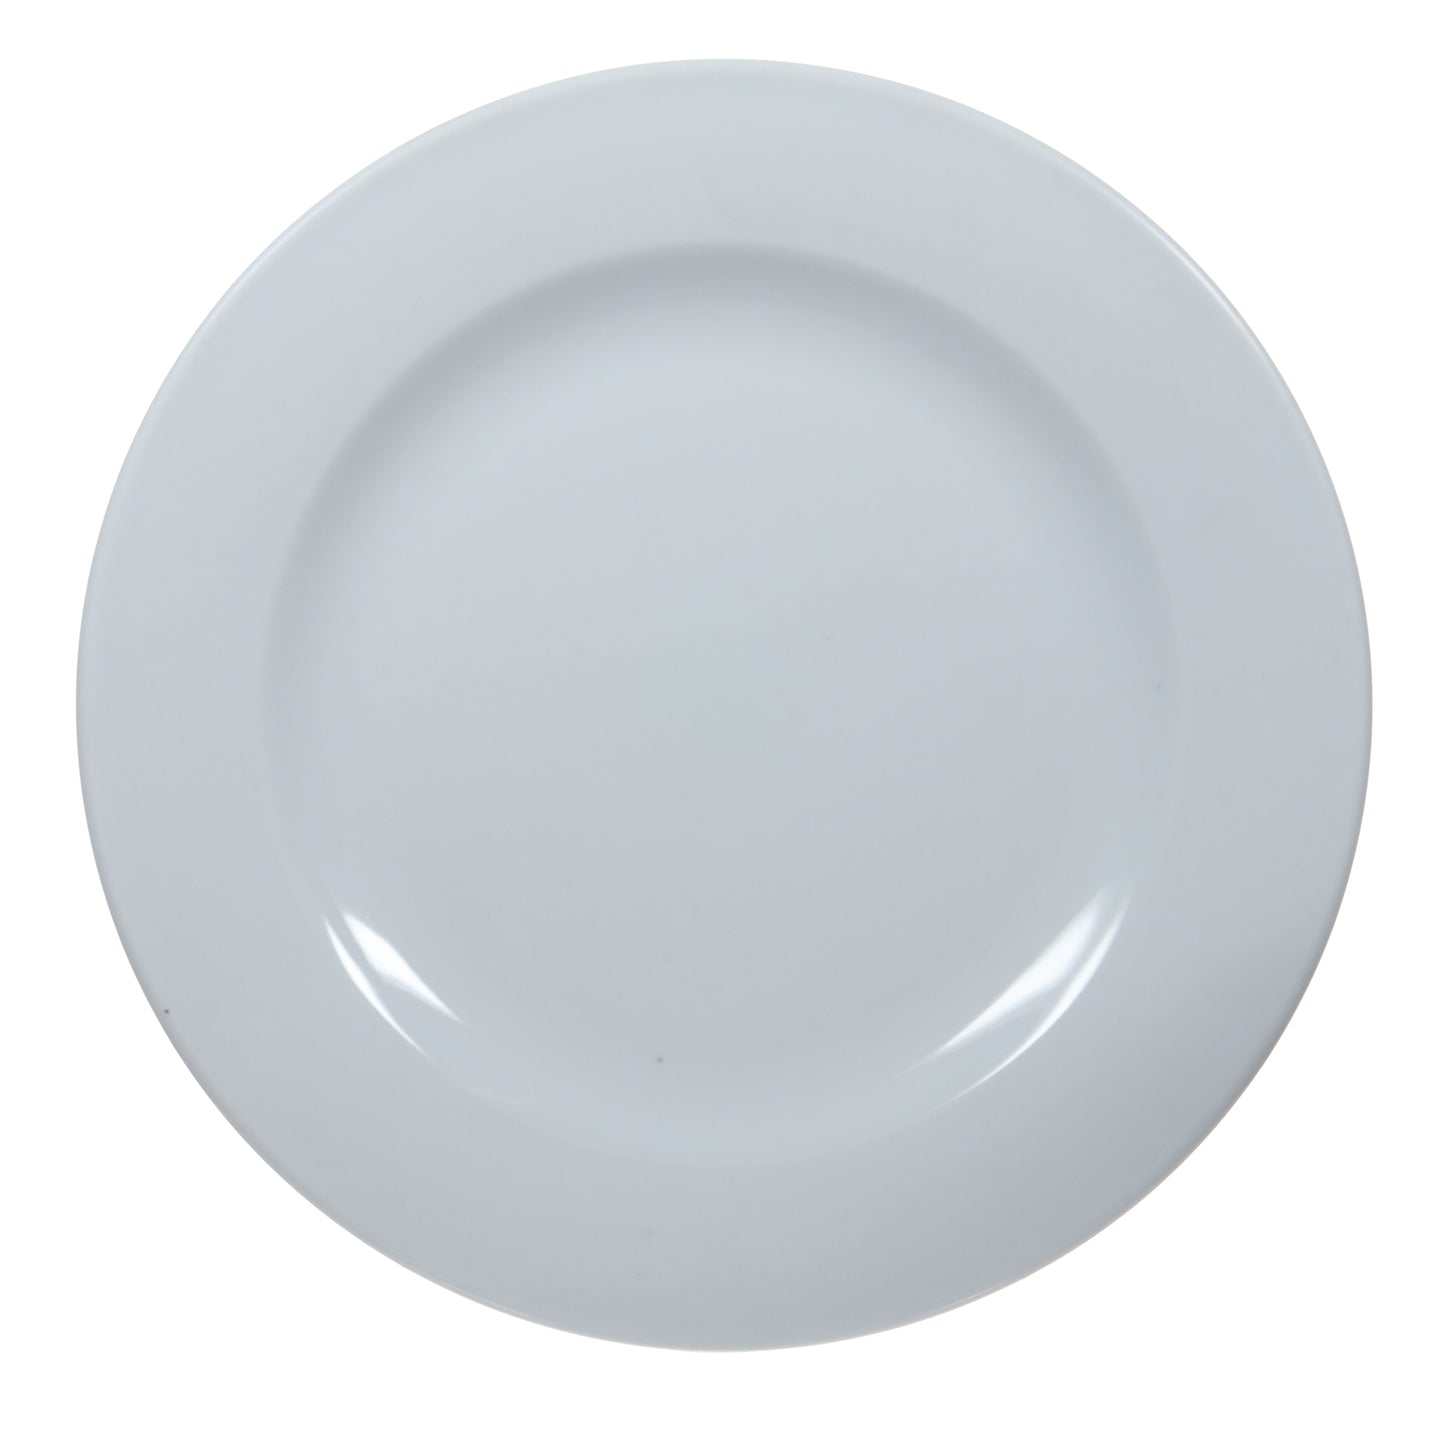 Round Plate with Rim - White